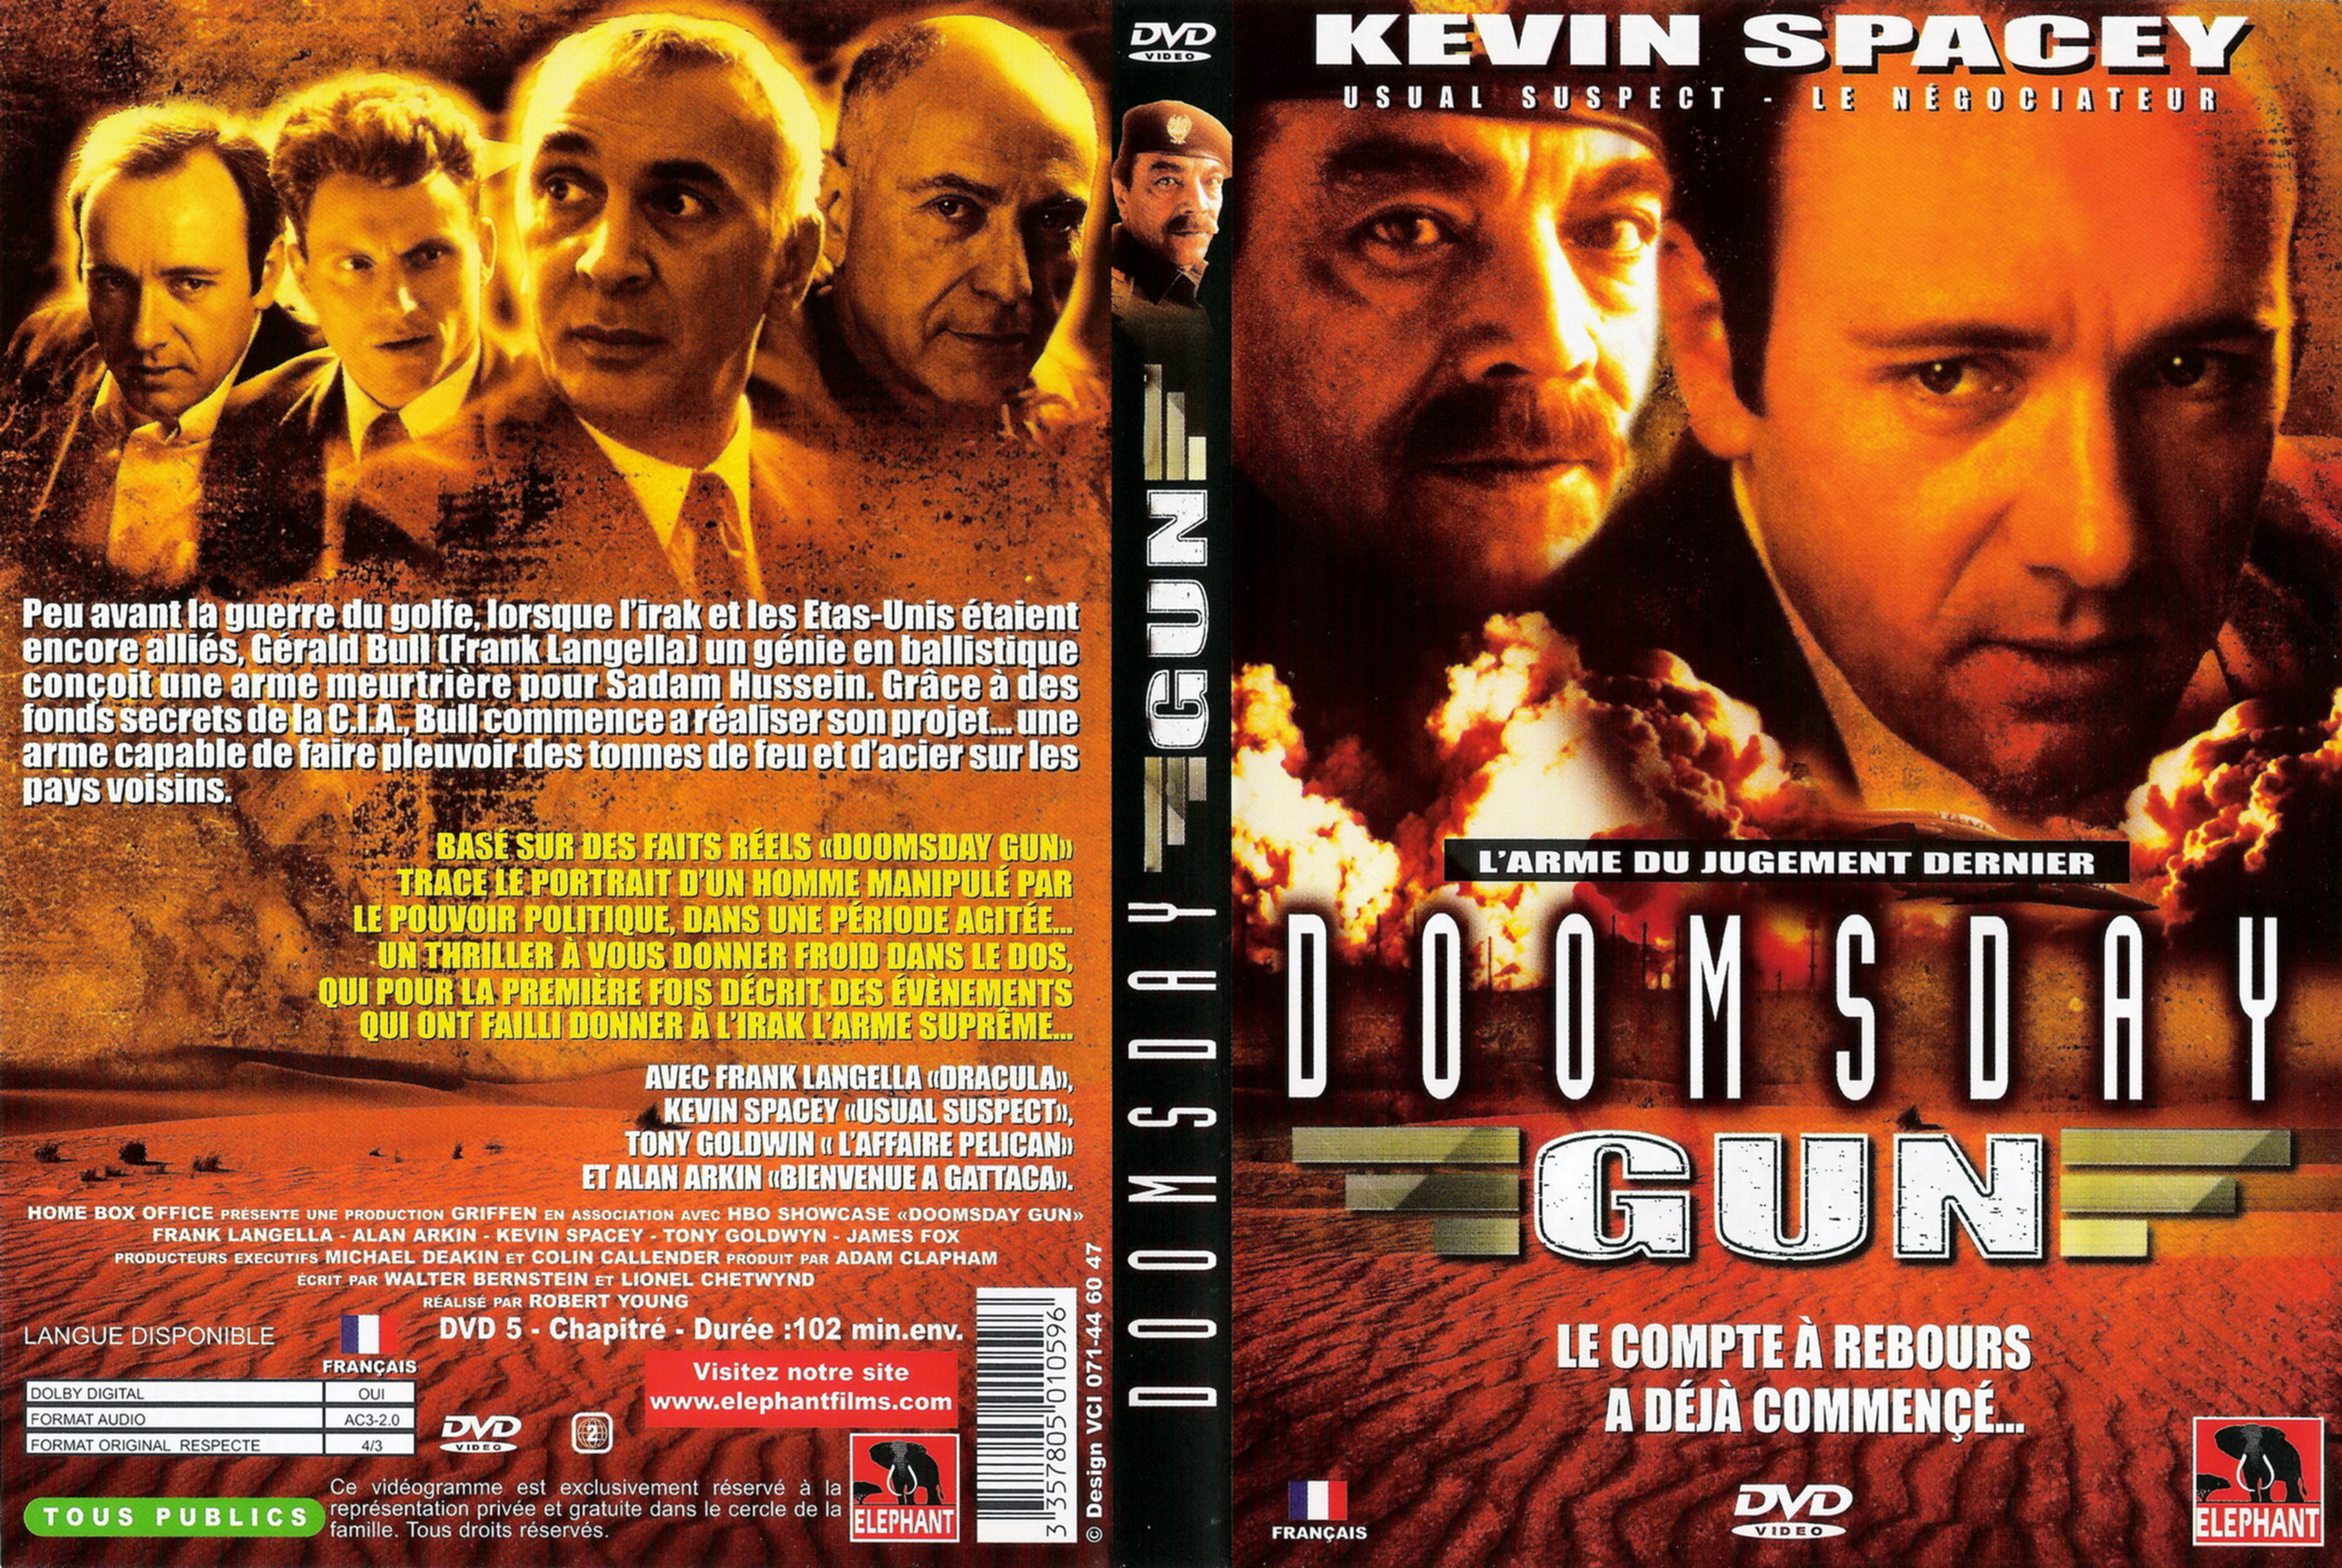 Jaquette DVD Doomsday gun